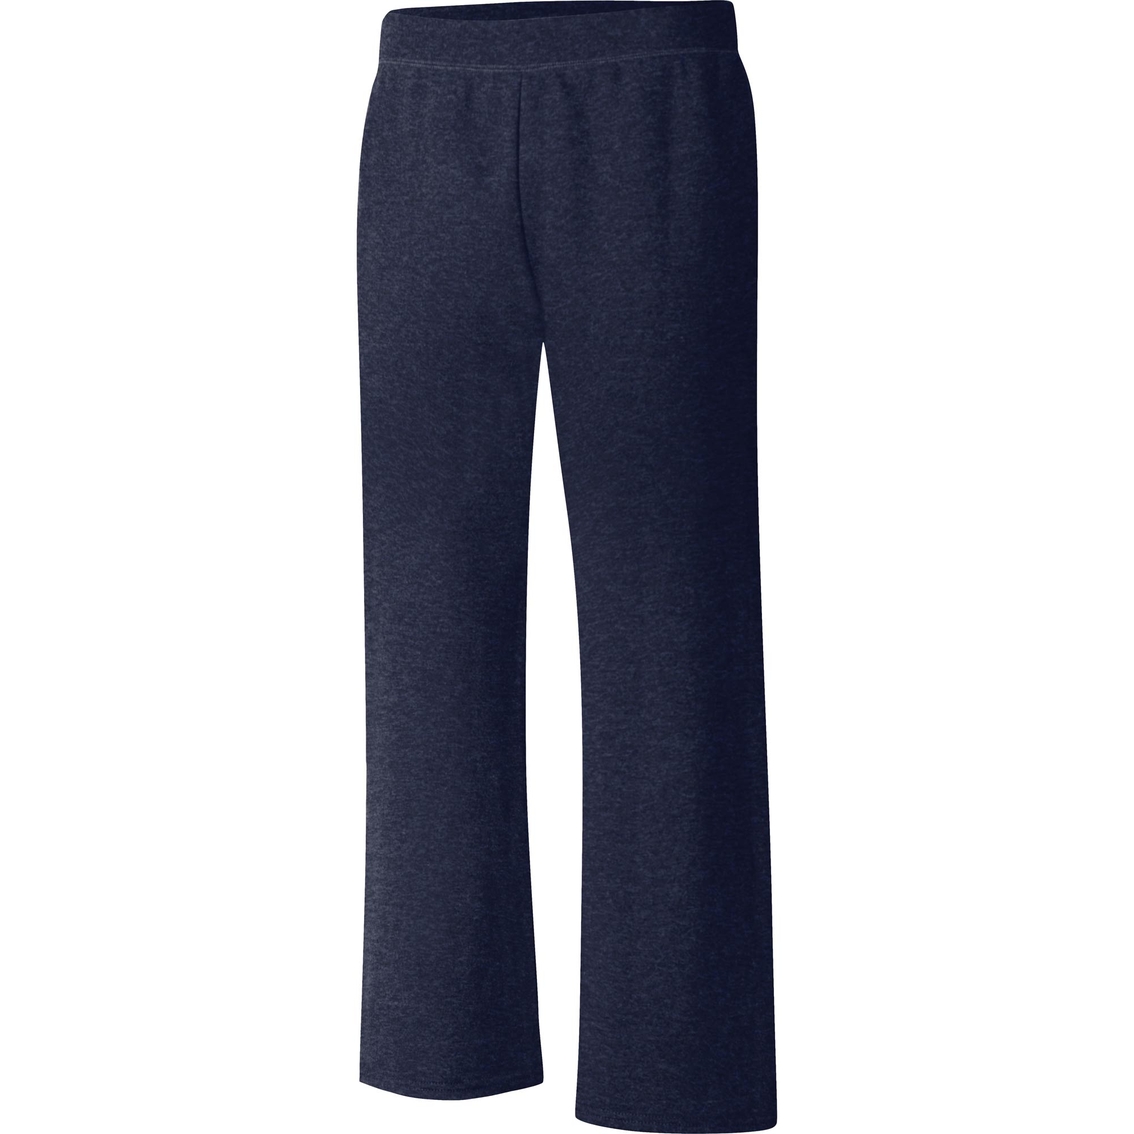 Hanes Comfortsoft Fleece Sweatpants With Pockets | Pants | Clothing ...